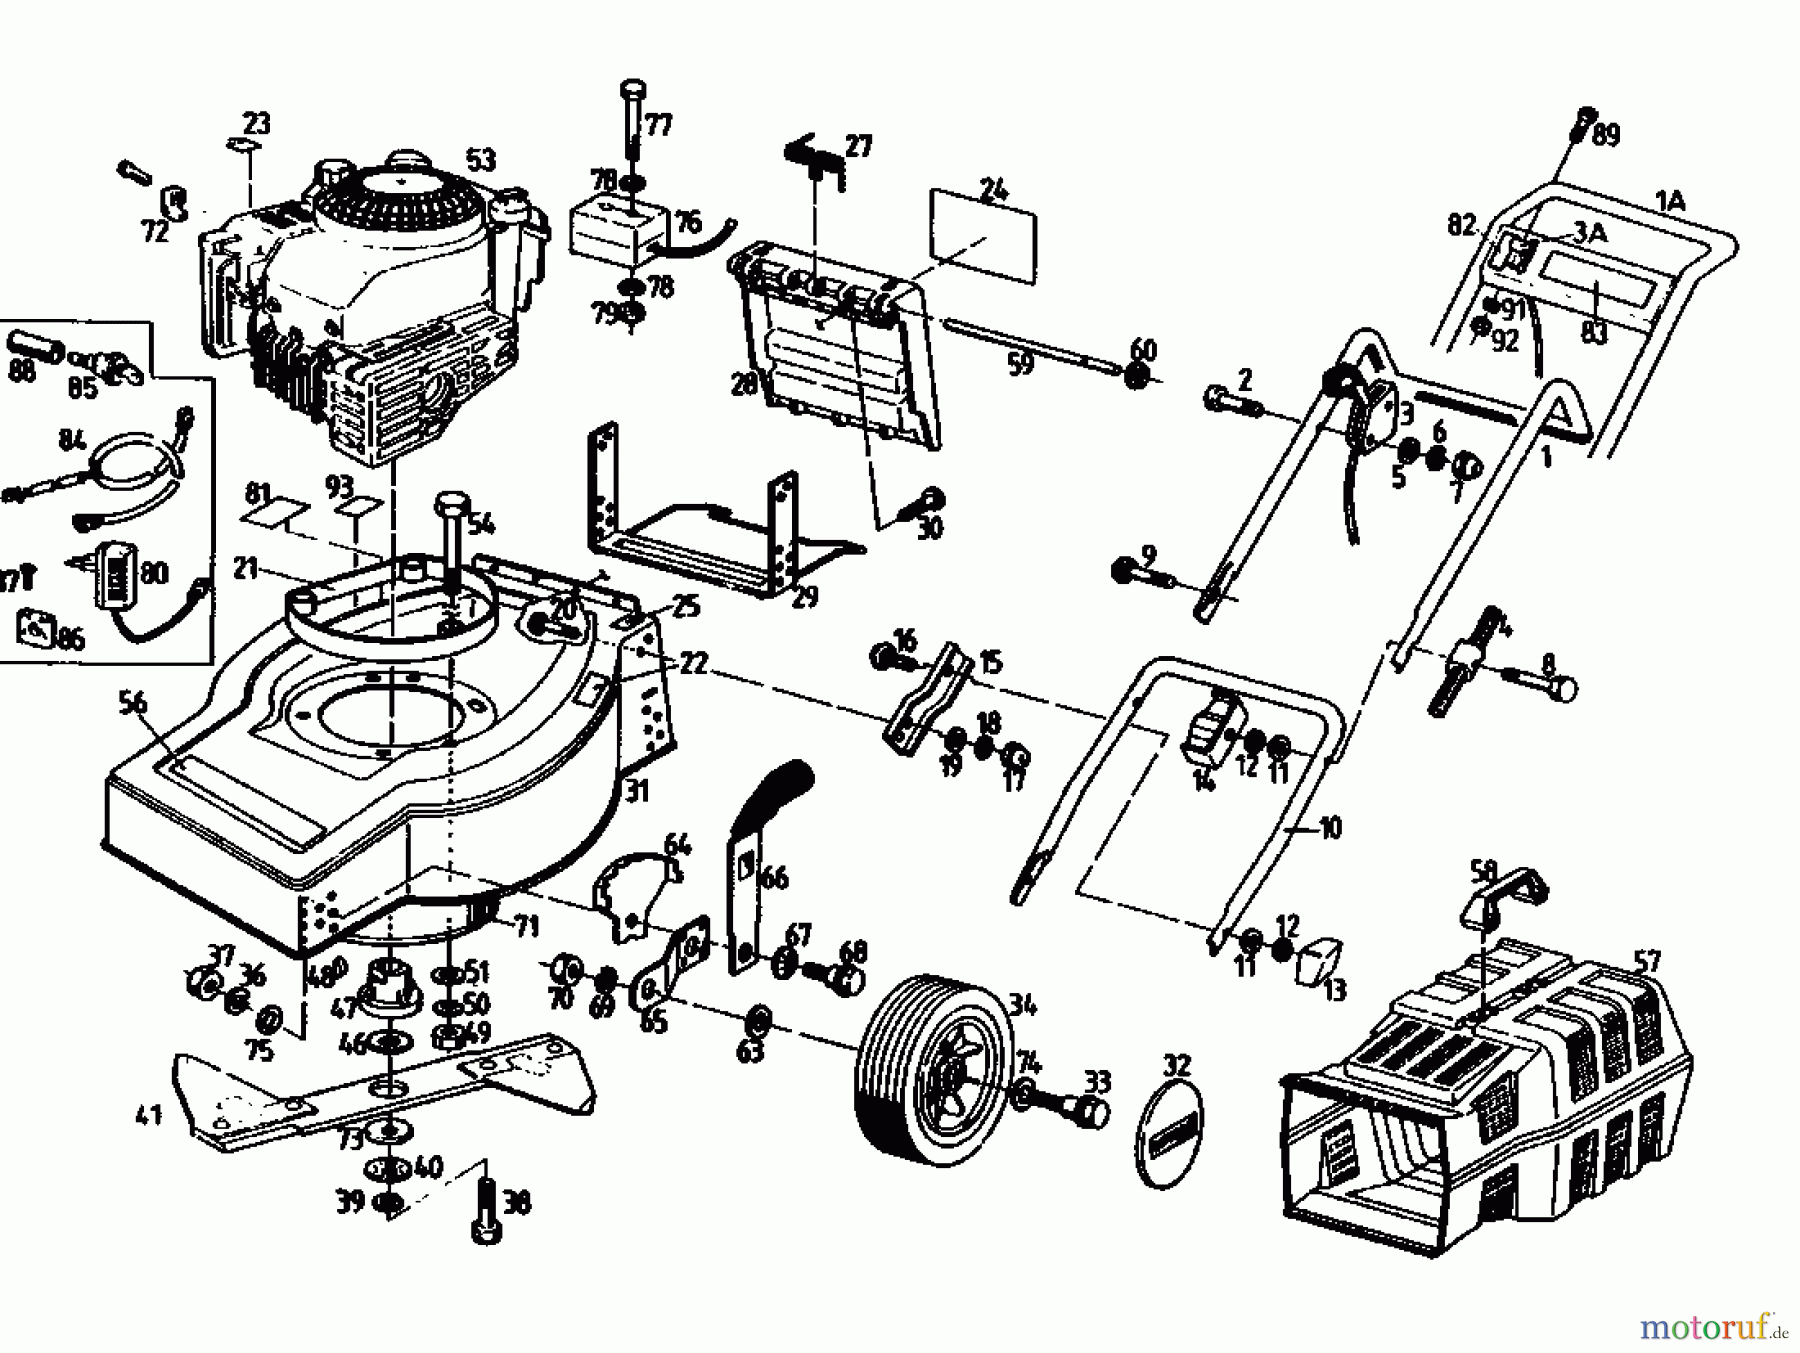  Gutbrod Petrol mower TURBO HBS 02893.06  (1993) Basic machine